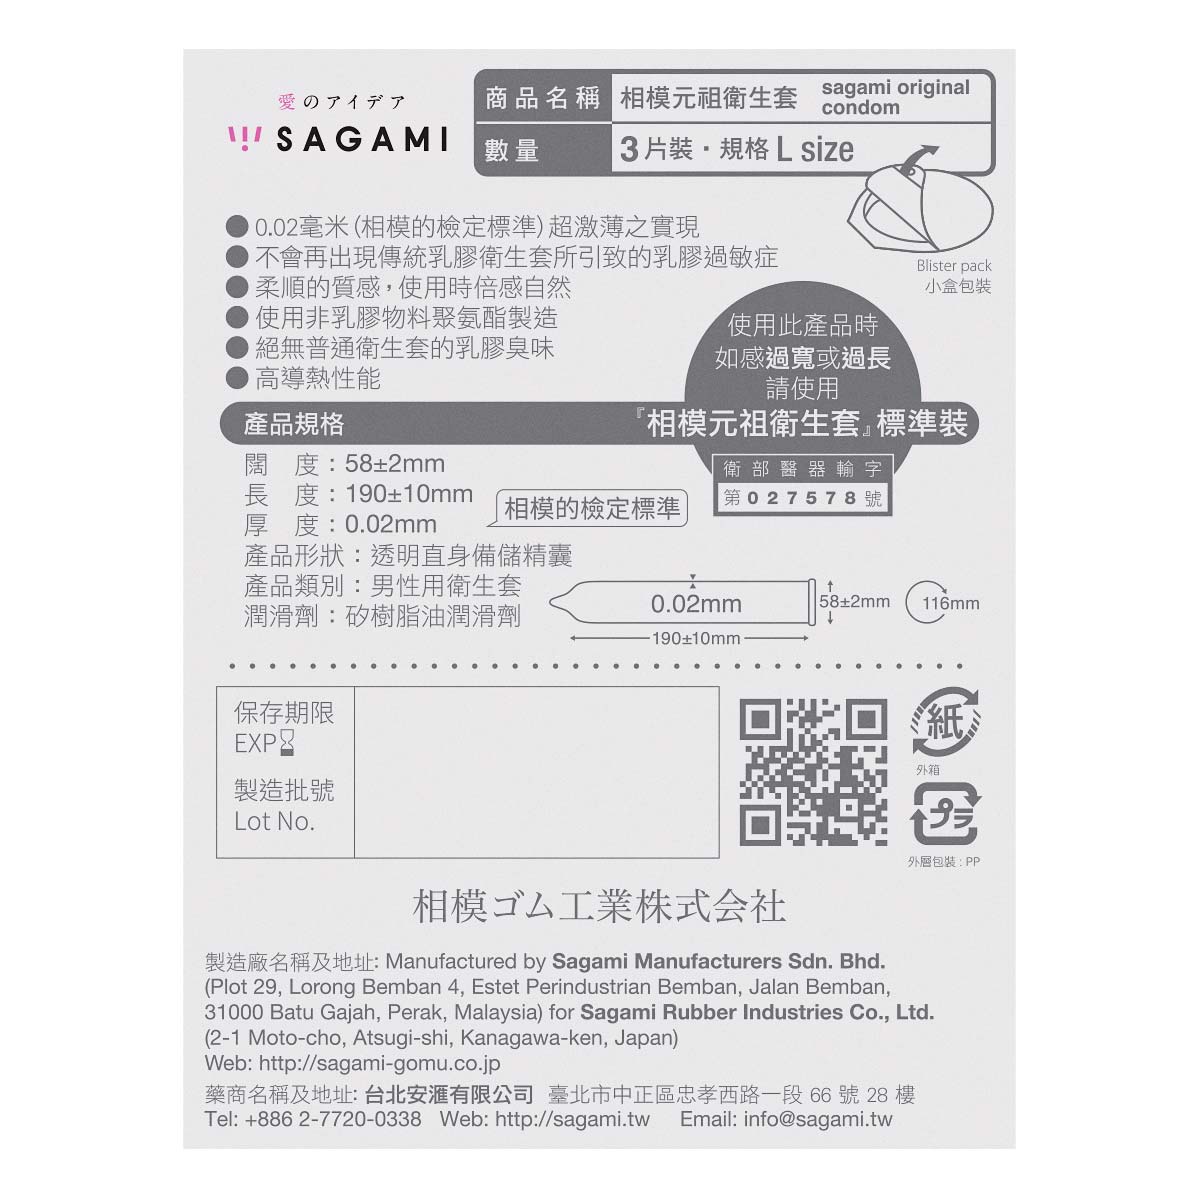 Sagami Original 0.02 L-size 58mm 3's Pack PU Condom (Defective Packaging)-p_3